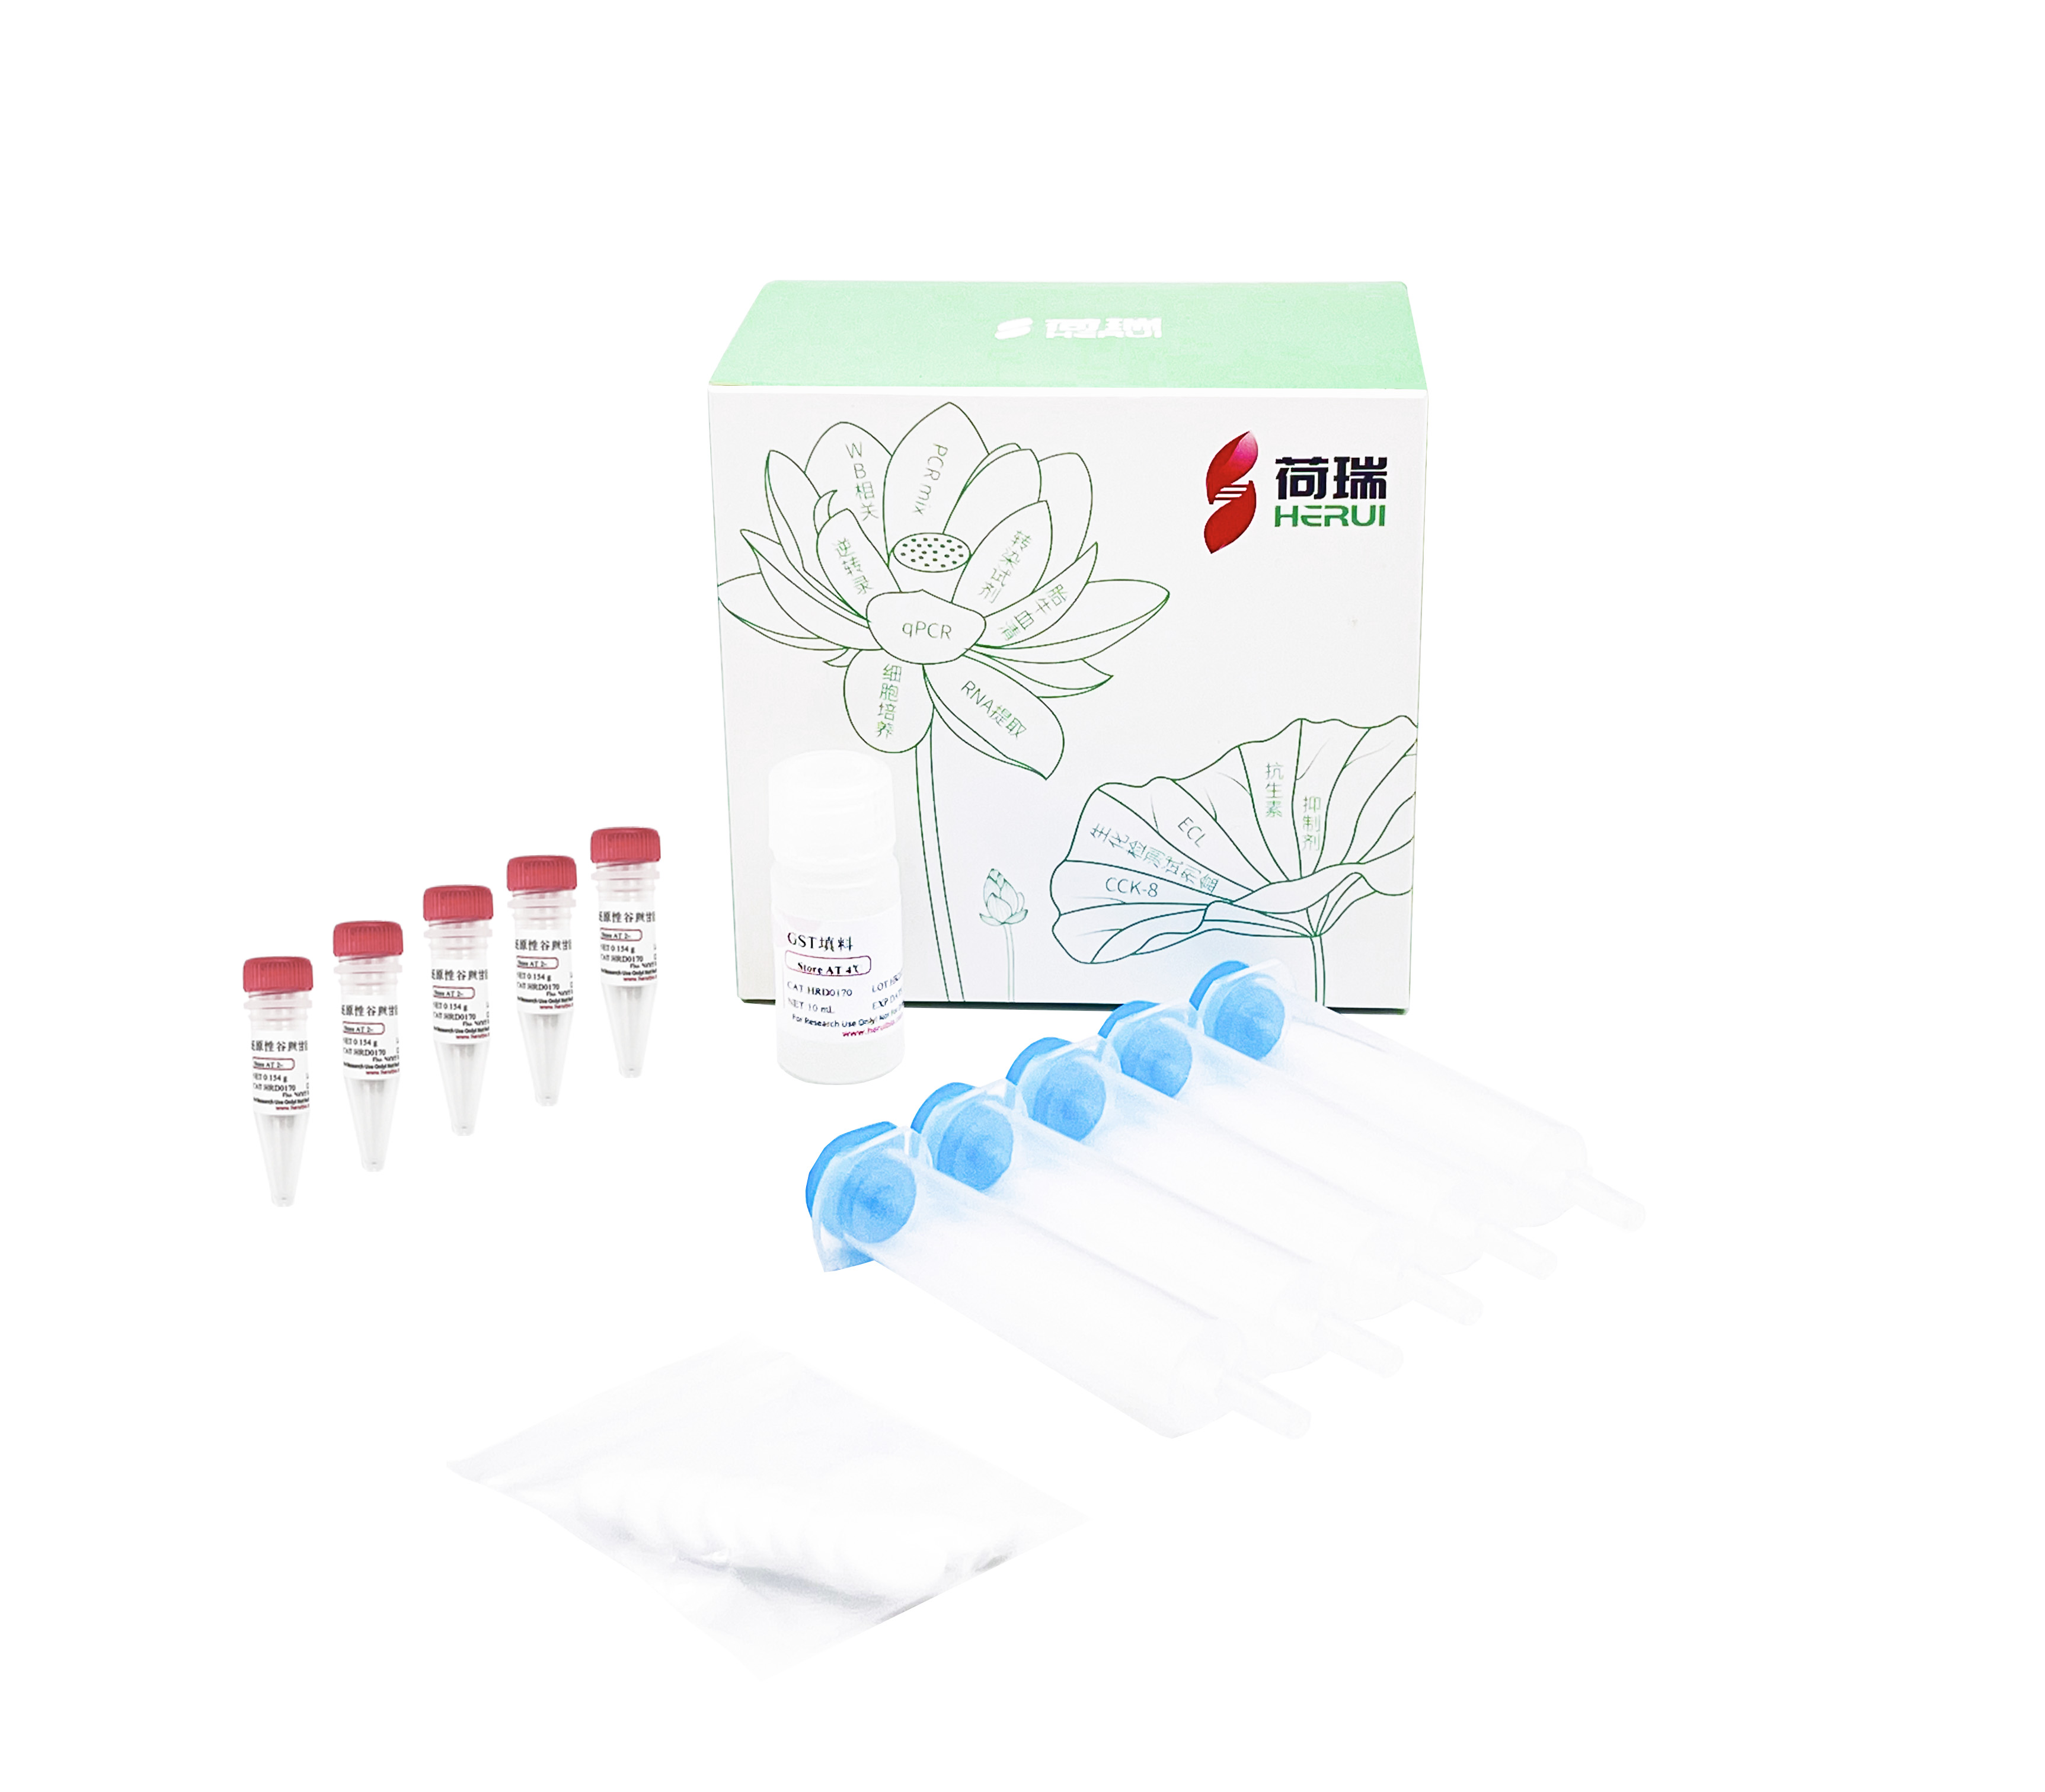 GST-tag Protein Purification Kit (GST标签蛋白纯化试剂盒)